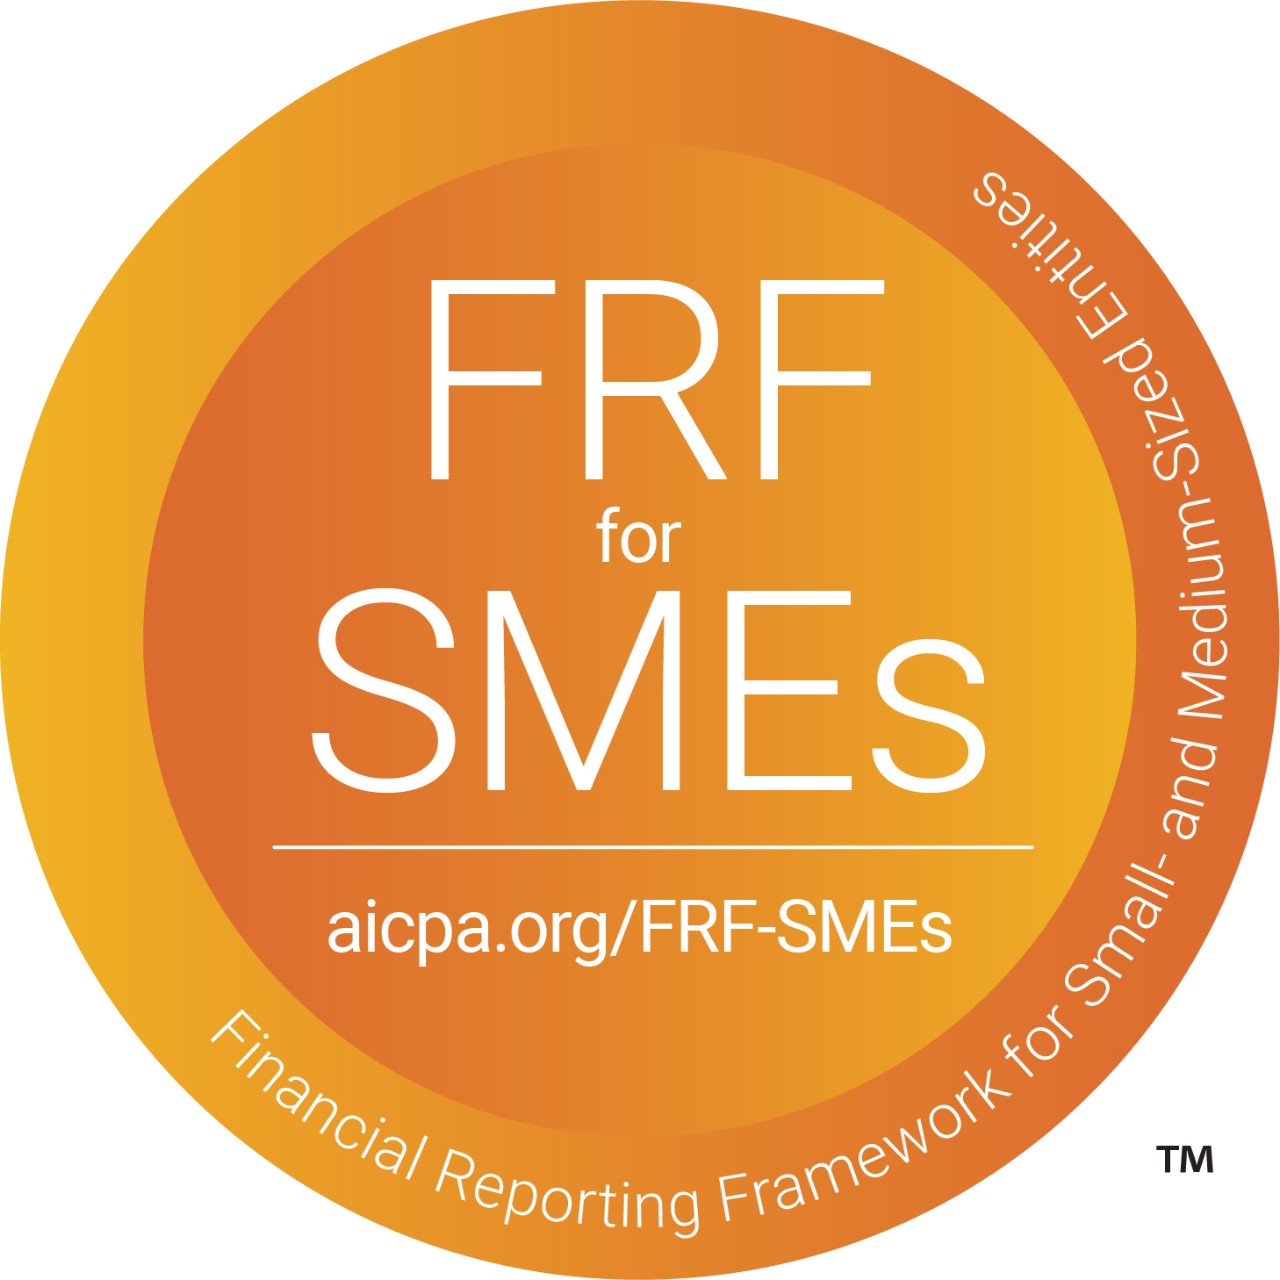 FRF for SMEs logo blue